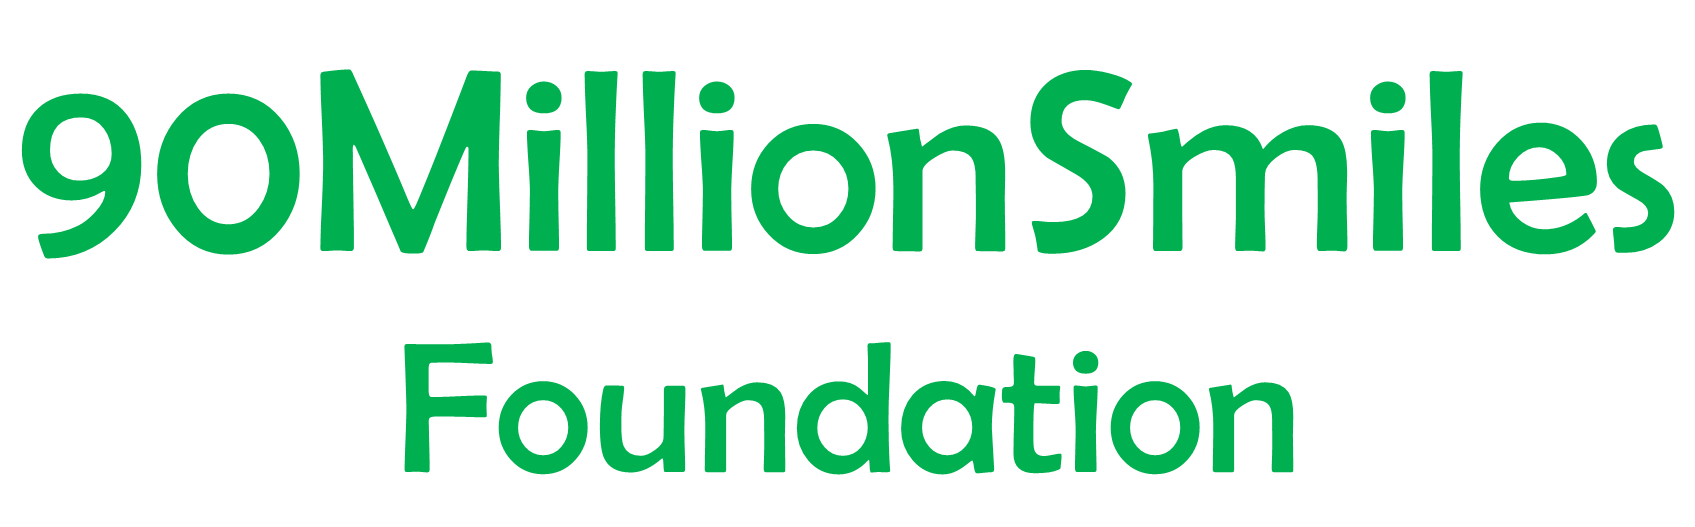 90MillionSmiles Foundation